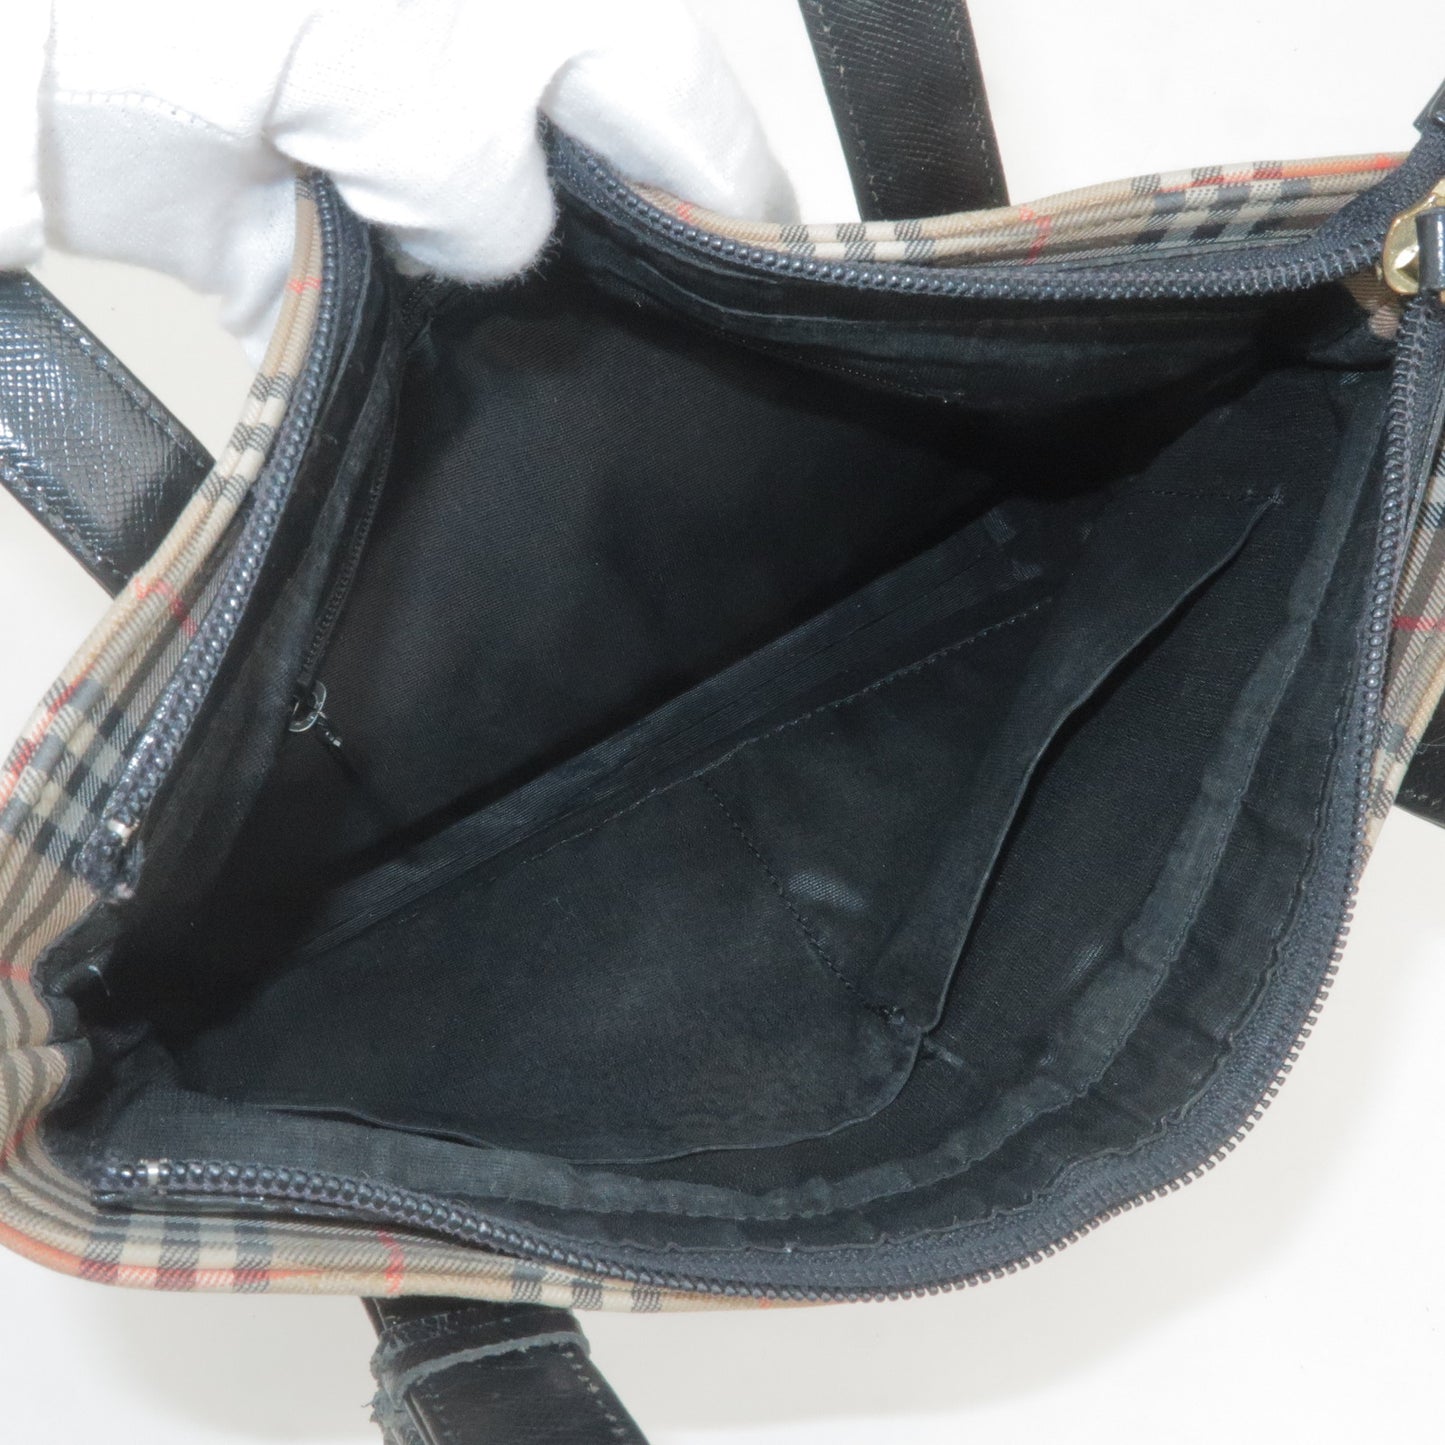 BURBERRY Nova Plaid Canvas Leather Tote Bag Beige Black